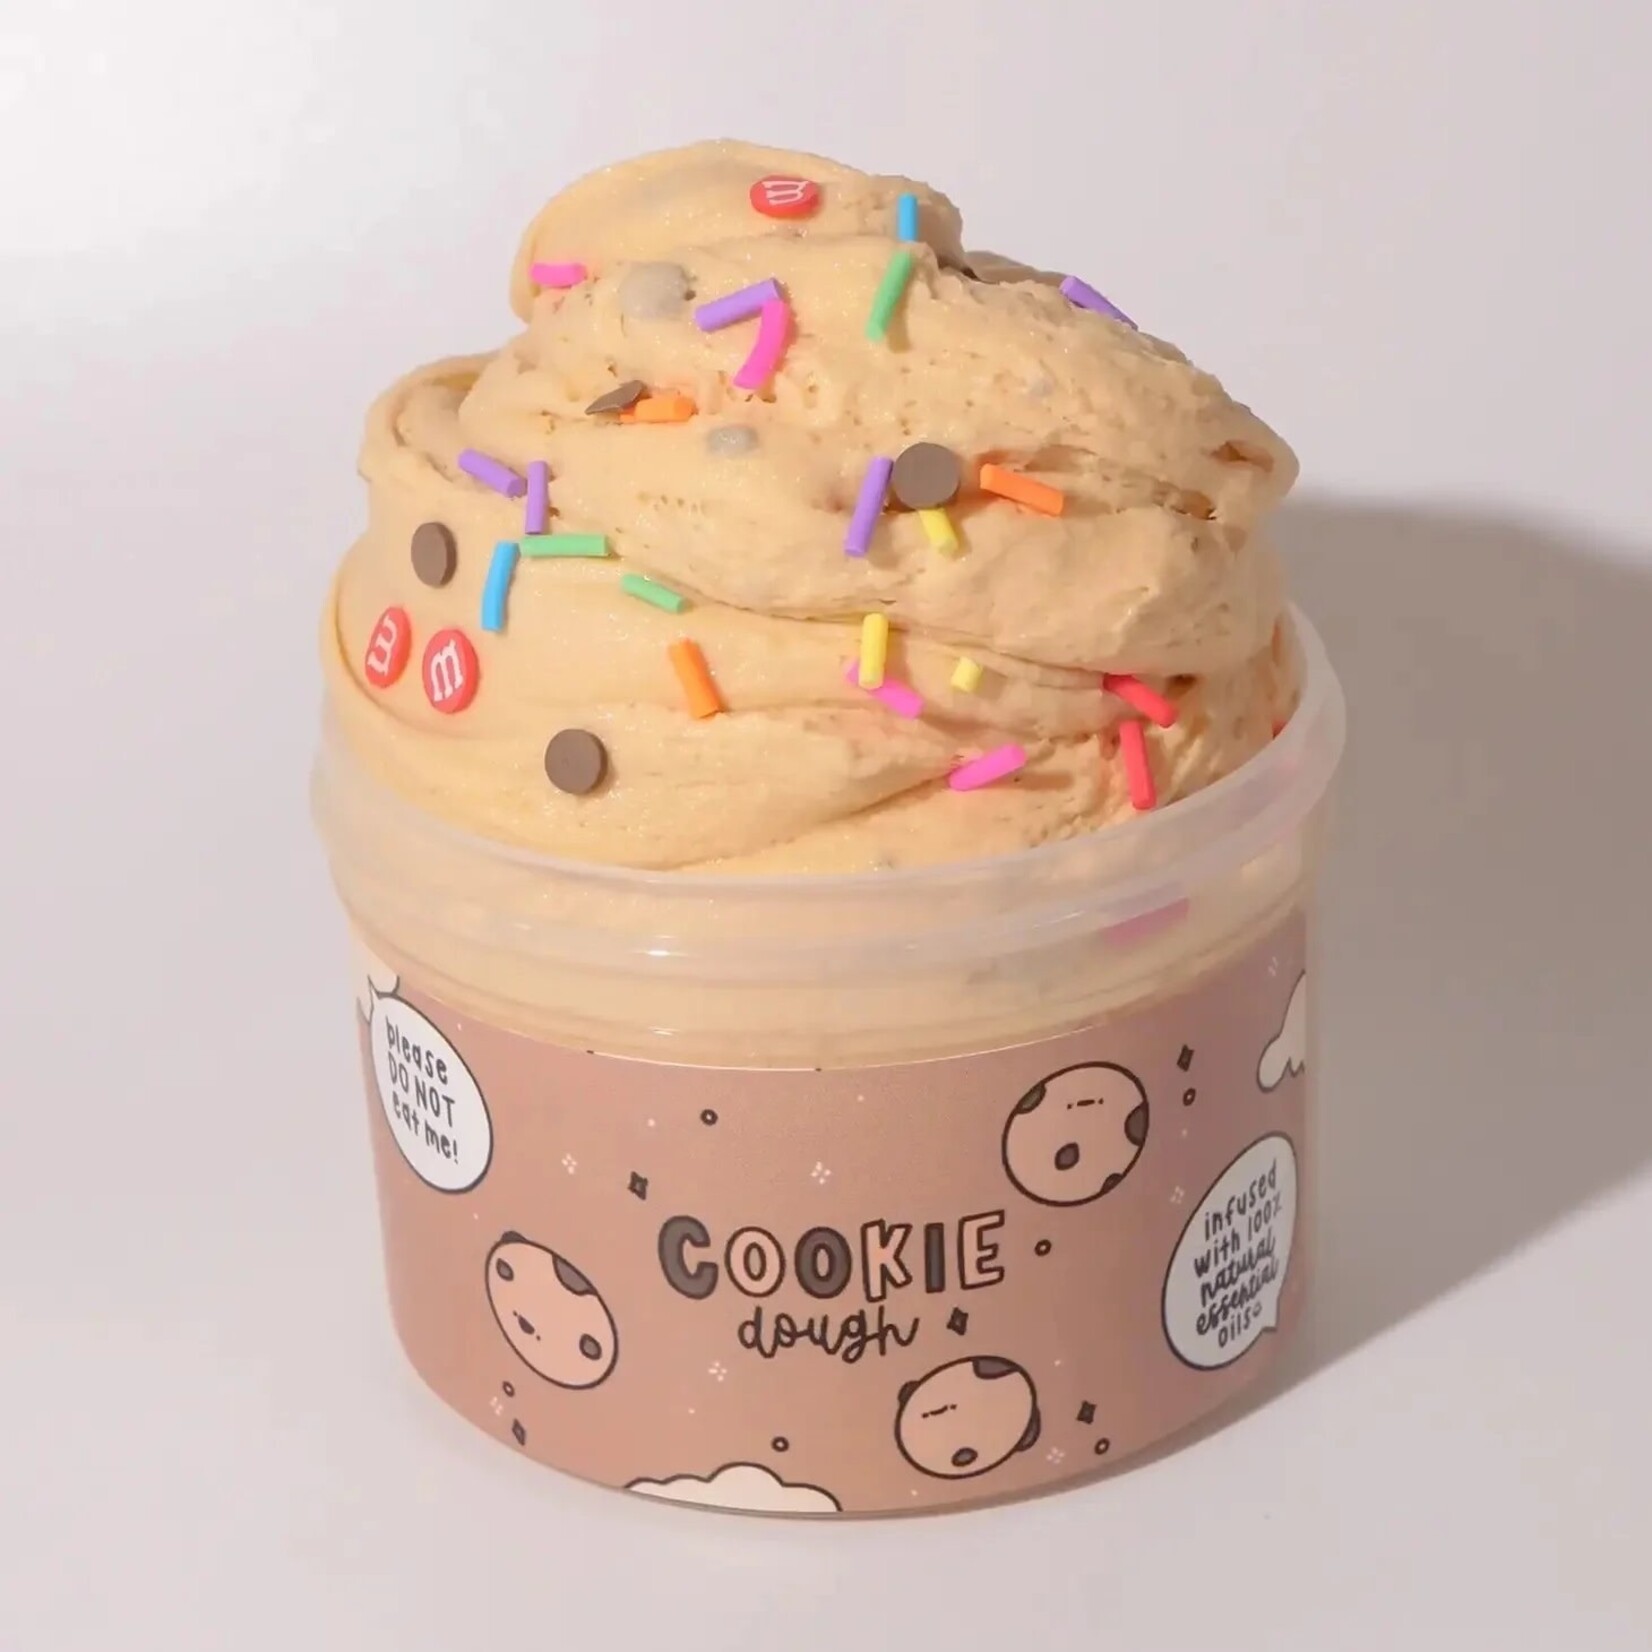 Sonria Slime SONRIA SLIME - Scented Cloud Cream Slime (7oz) - Cookie dough